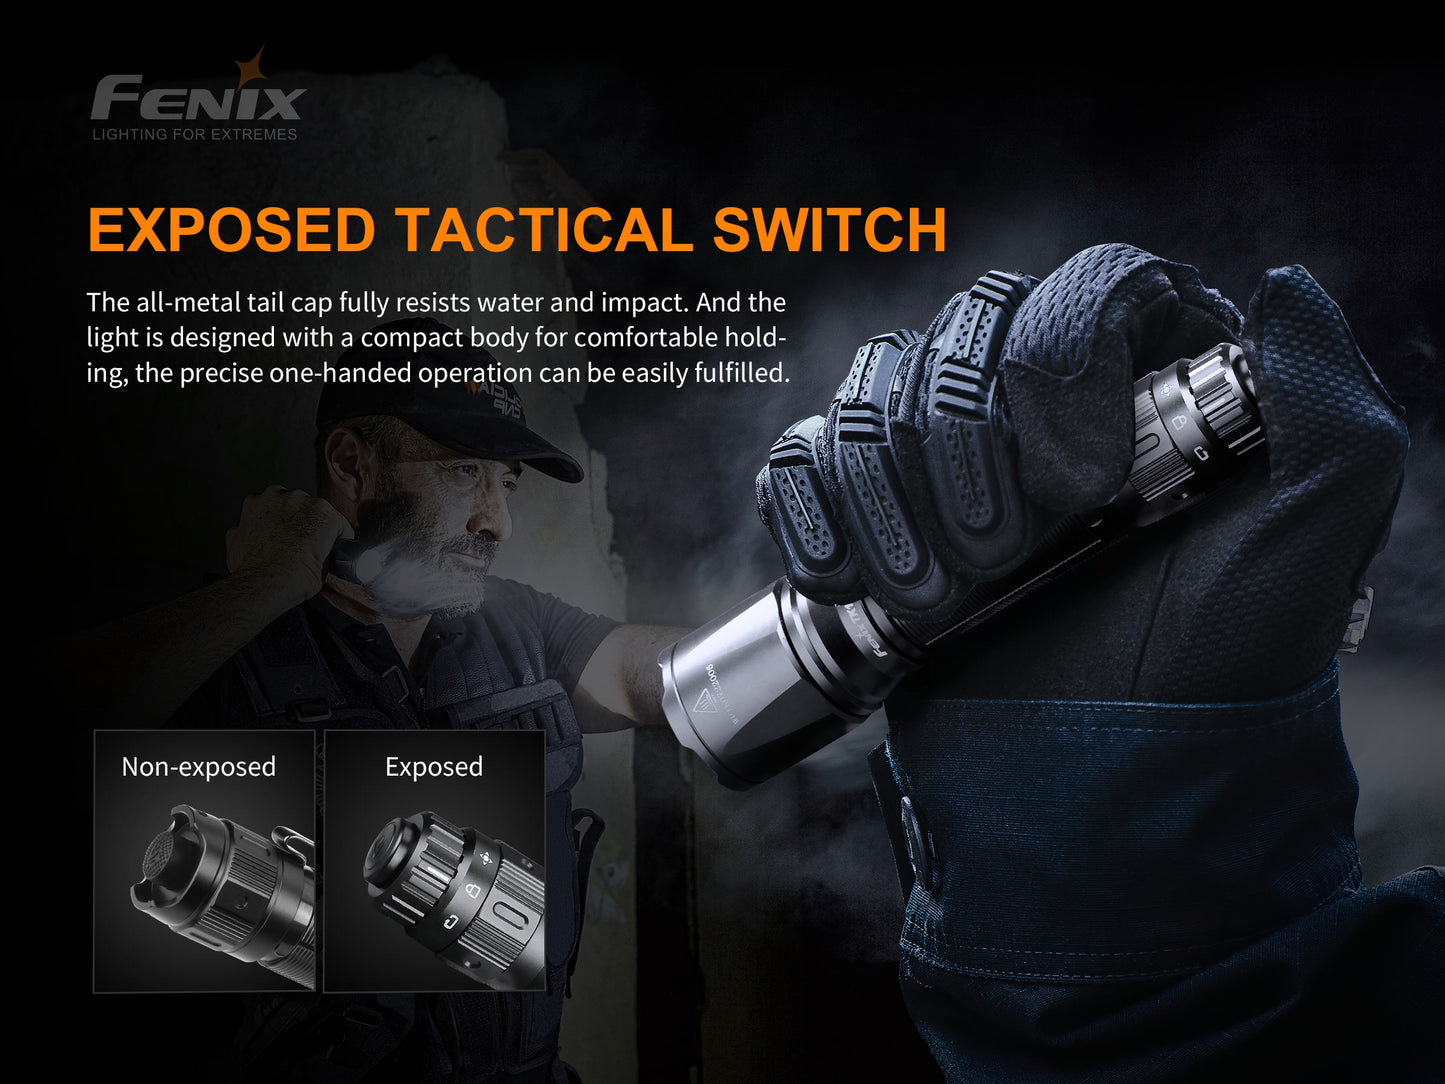 Fenix TK11 TAC Tactical LED Flashlight